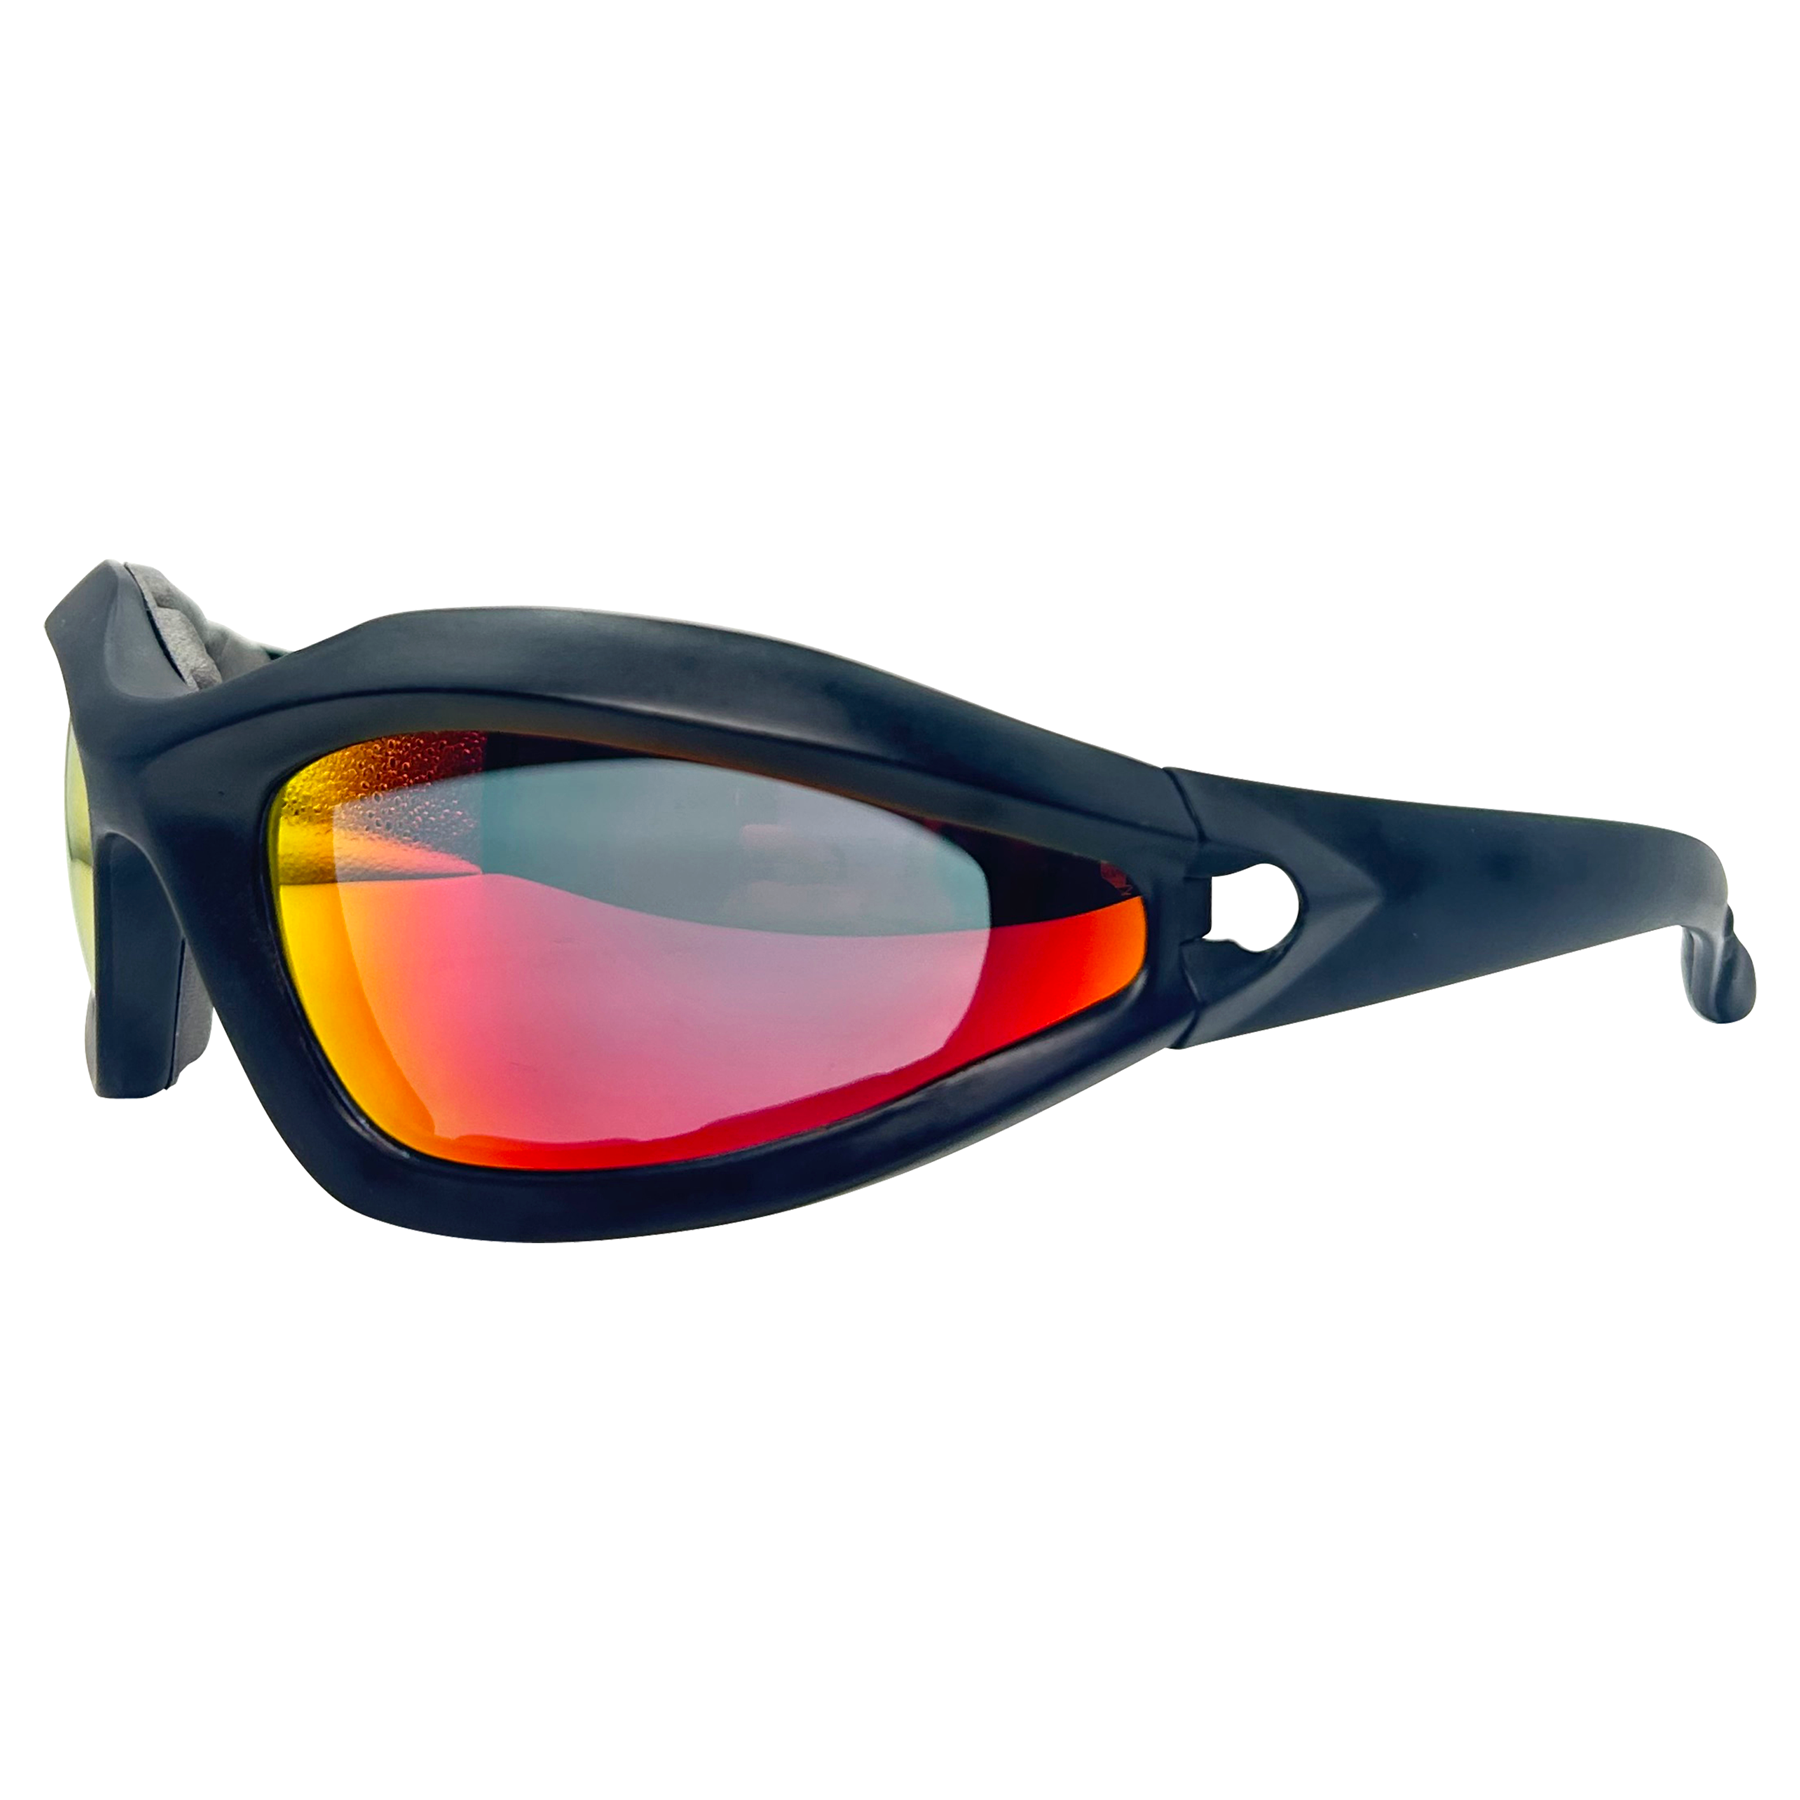 unique sunglasses with RV lens, matte black wraparound sports style